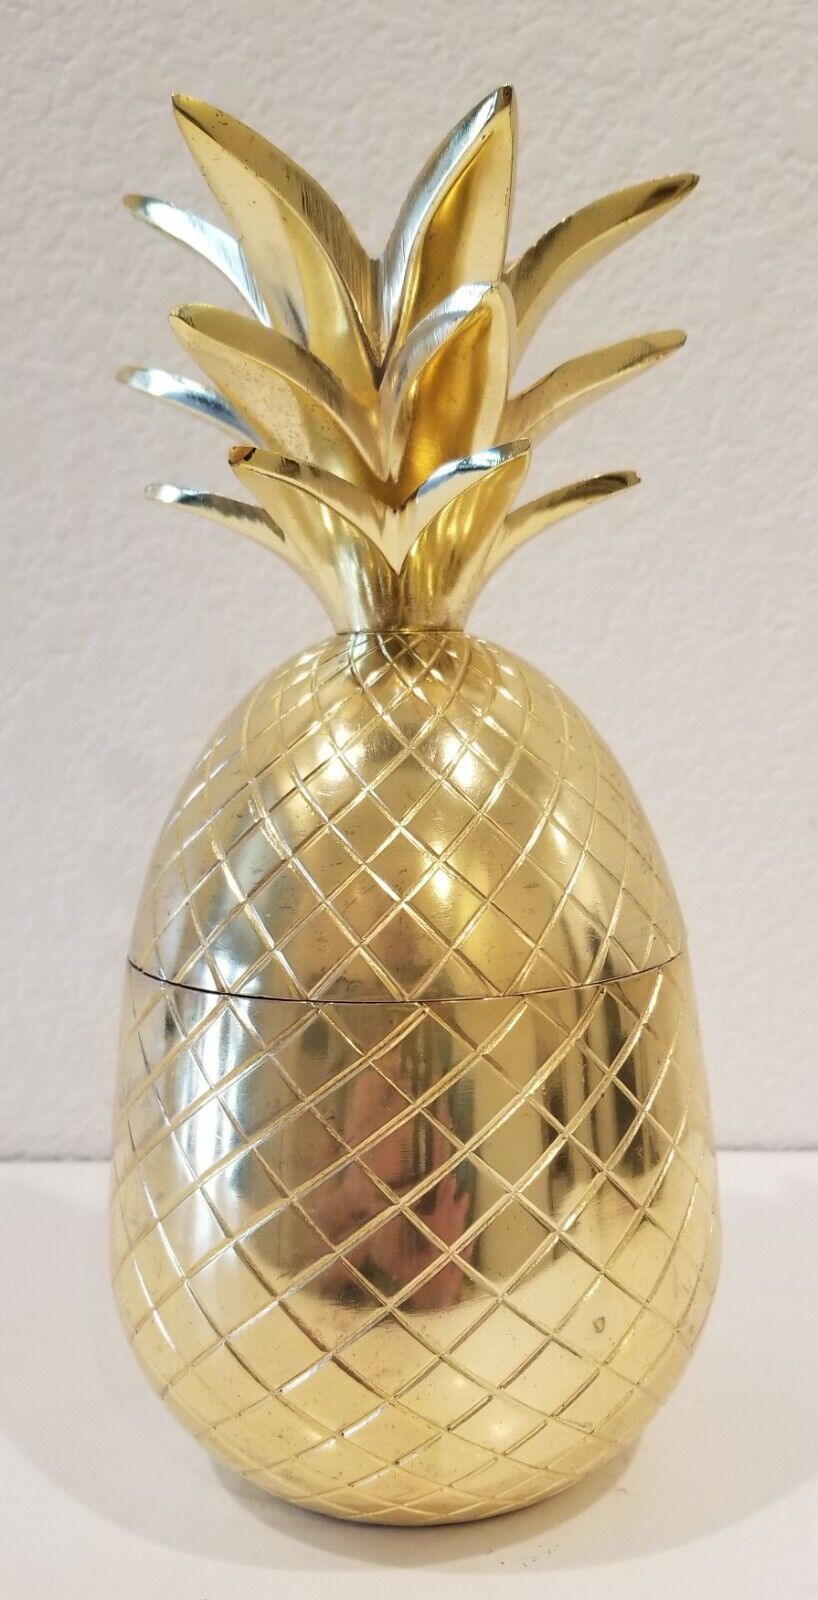 Gold tone pineapple barware accessory décor